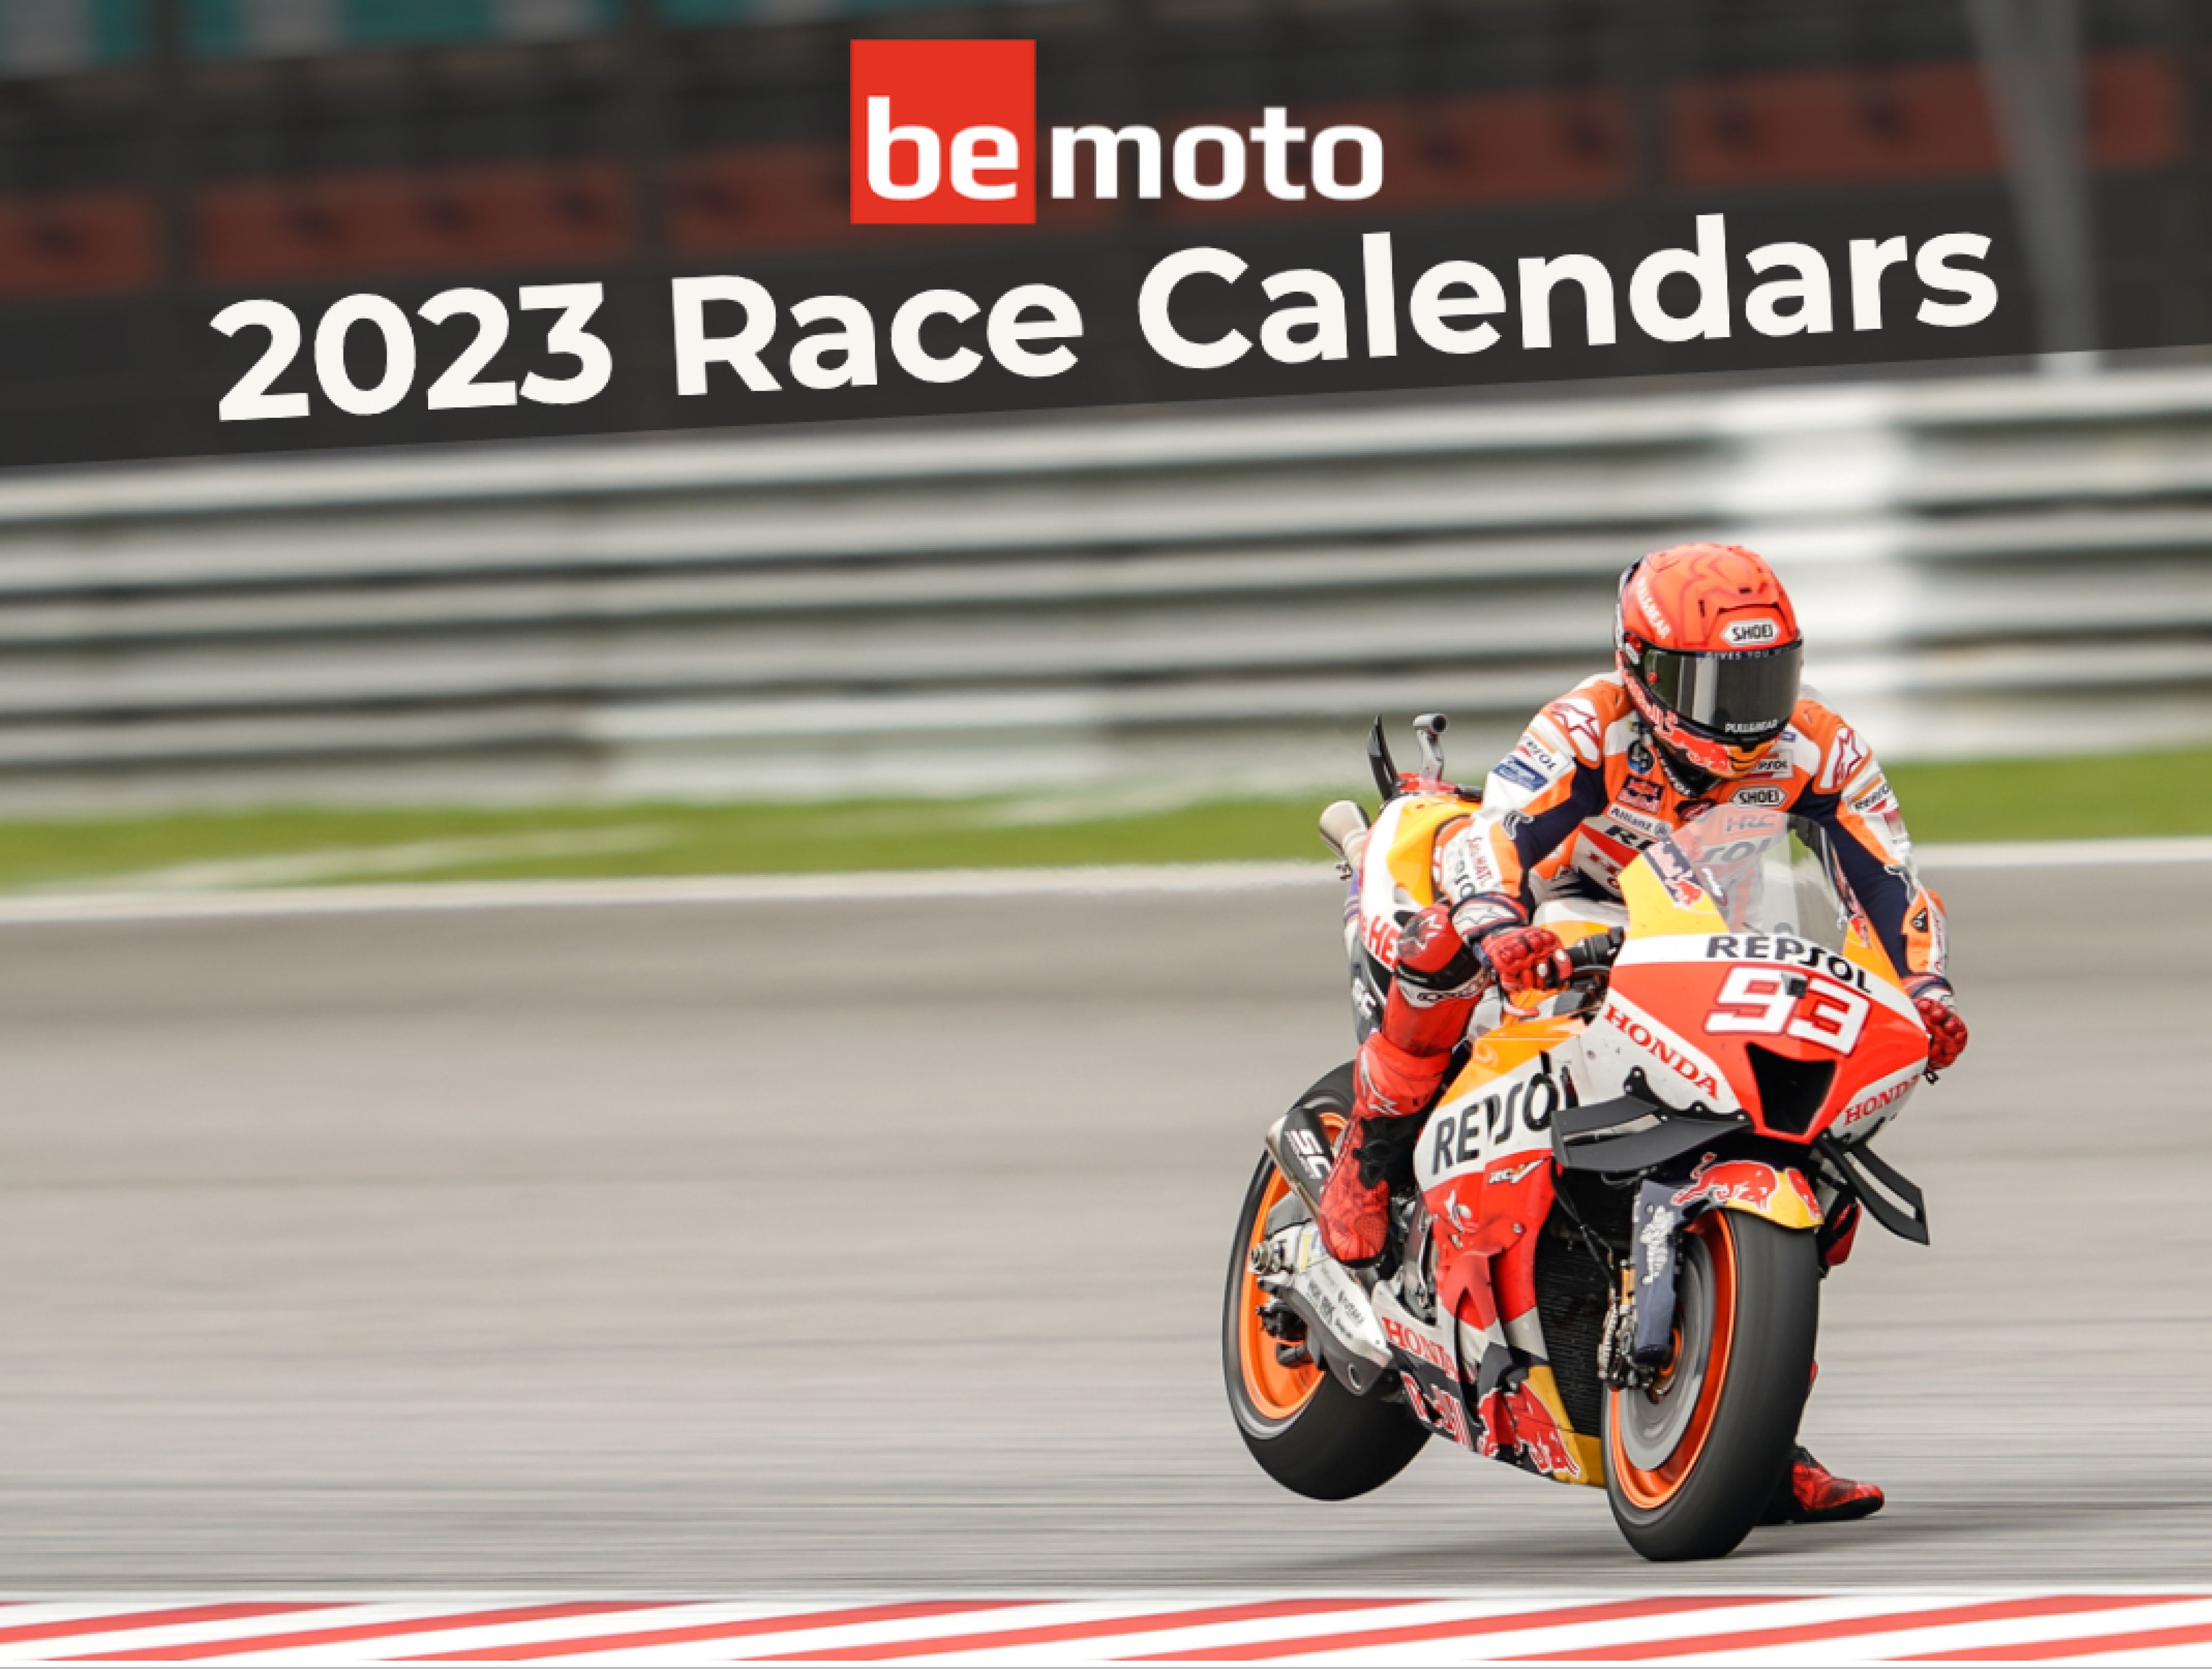 2023 Motorcycle Race Calendars BeMoto